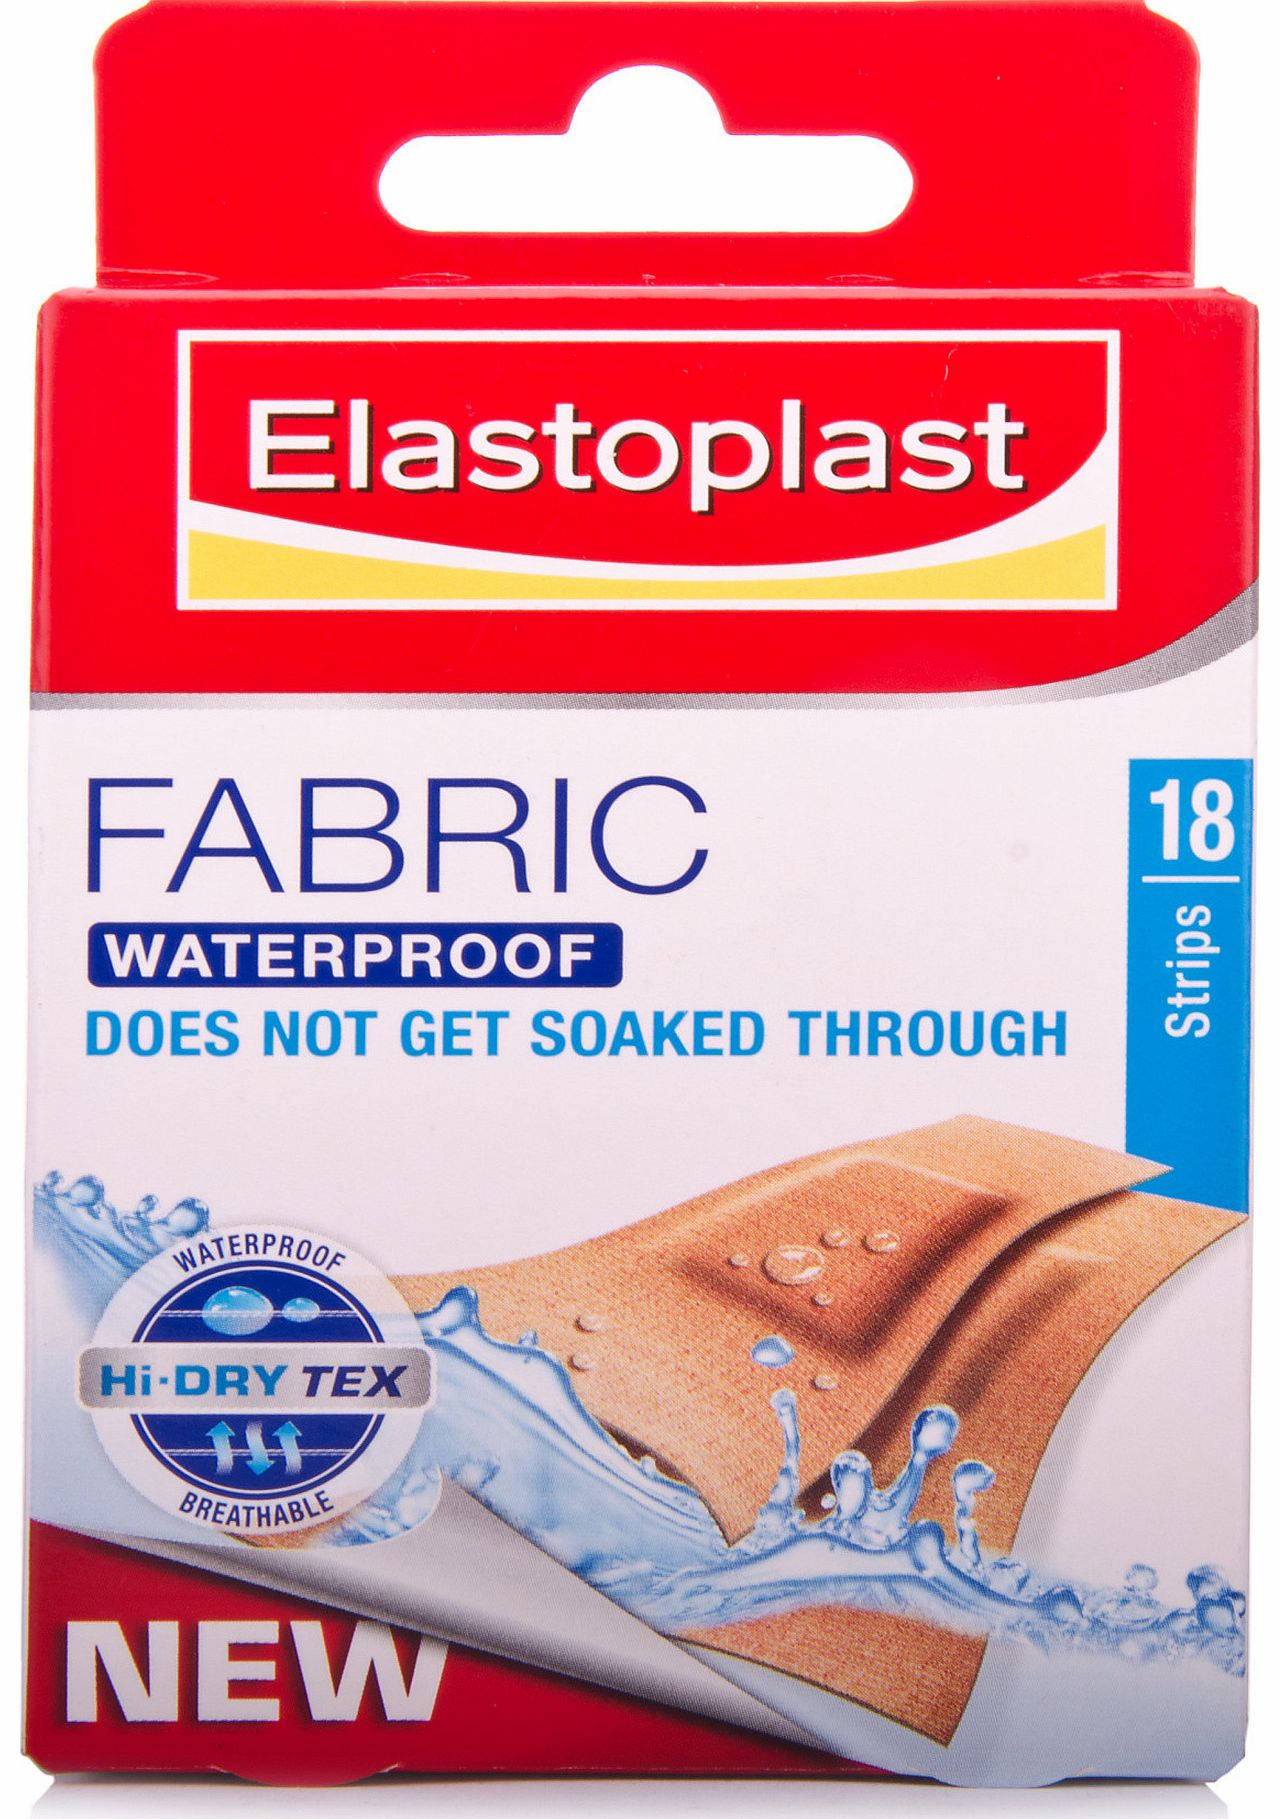 Fabric Washproof Plasters